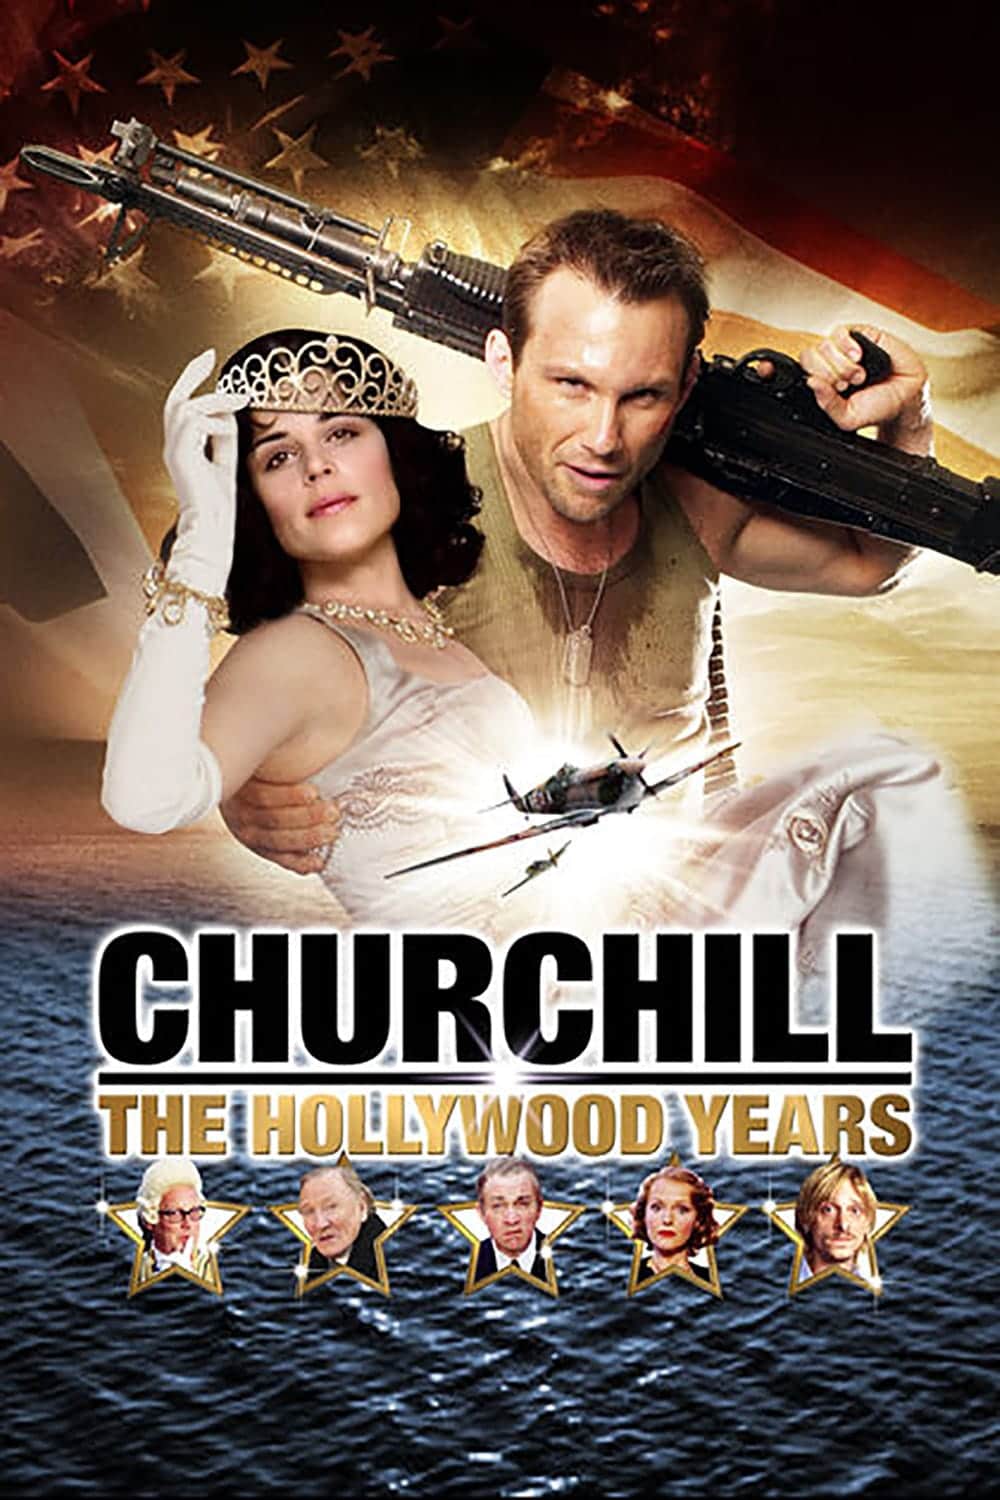 Plakat von "Churchill: The Hollywood Years"